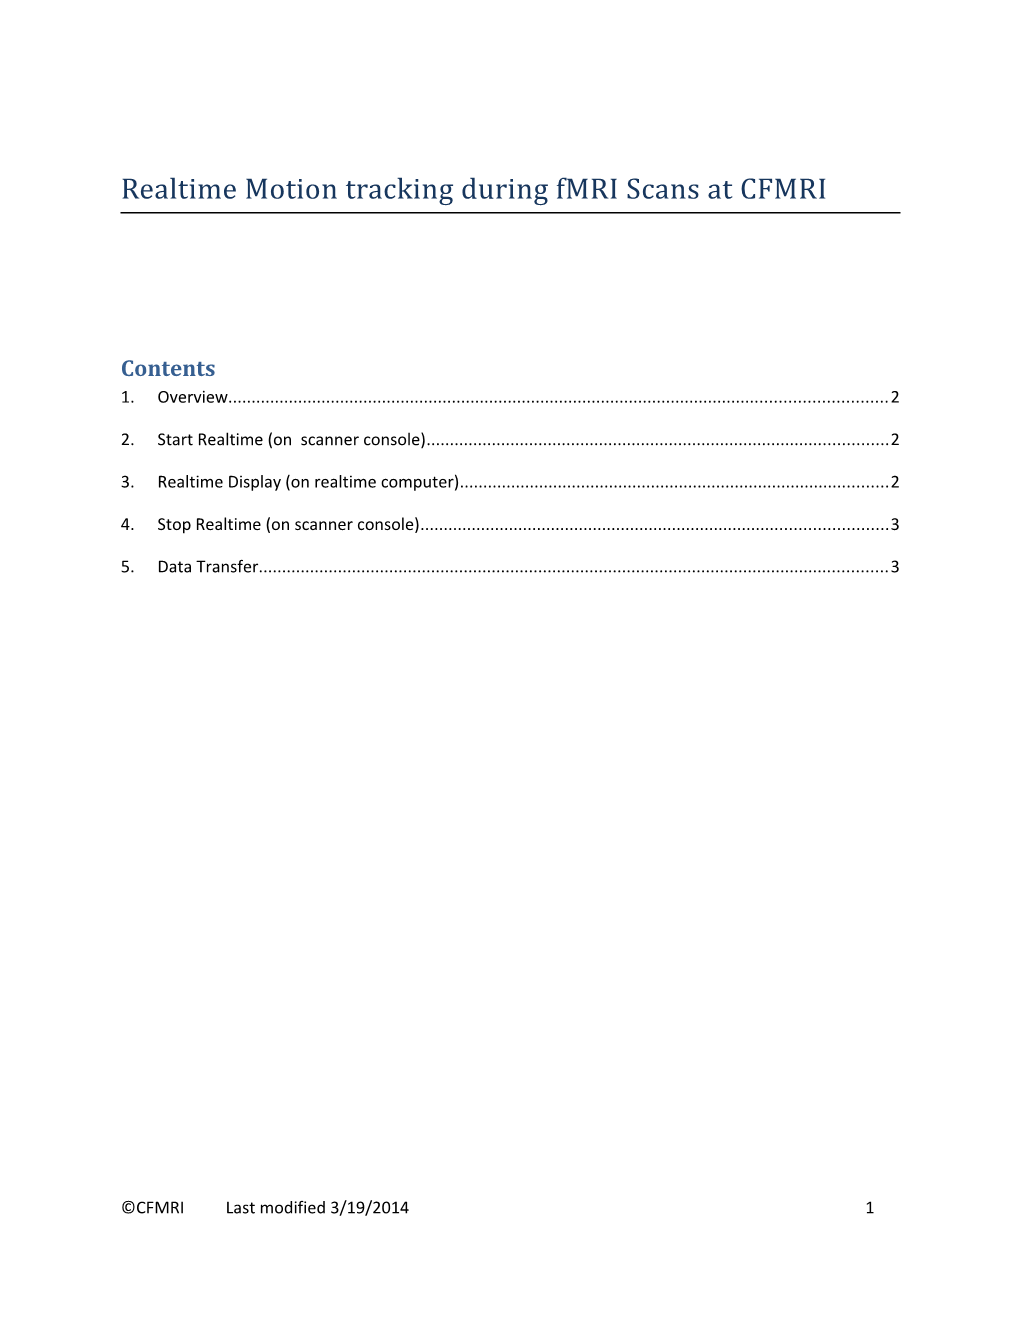 Realtime Motion Tracking During Fmri Scans at CFMRI